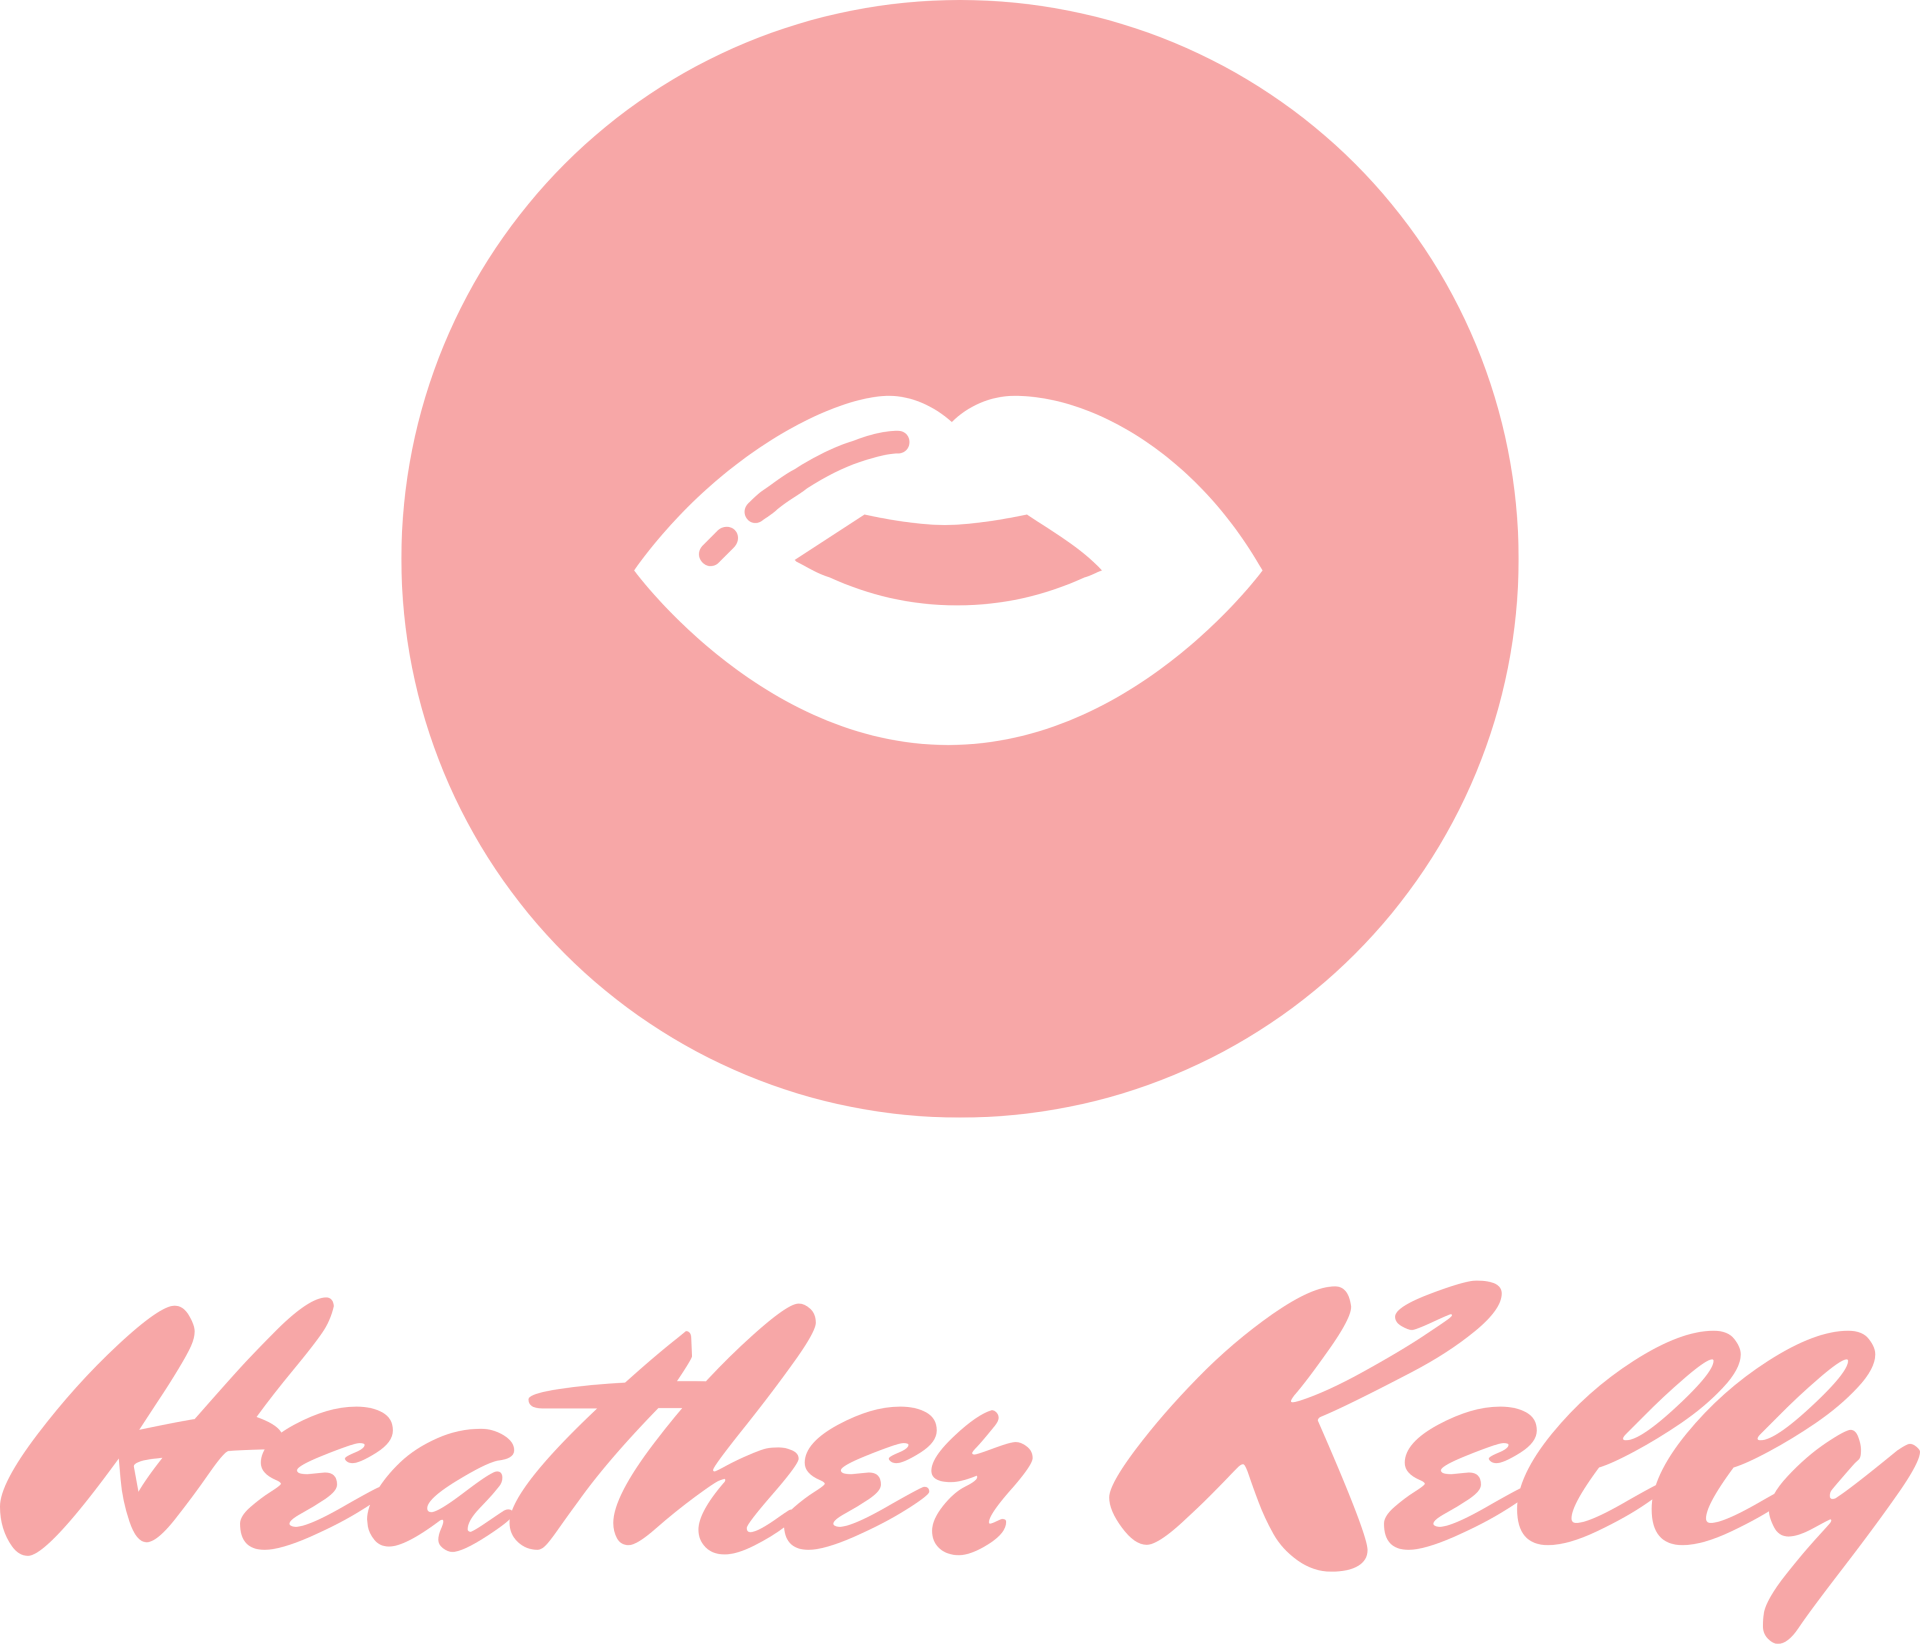 Heather Kelly